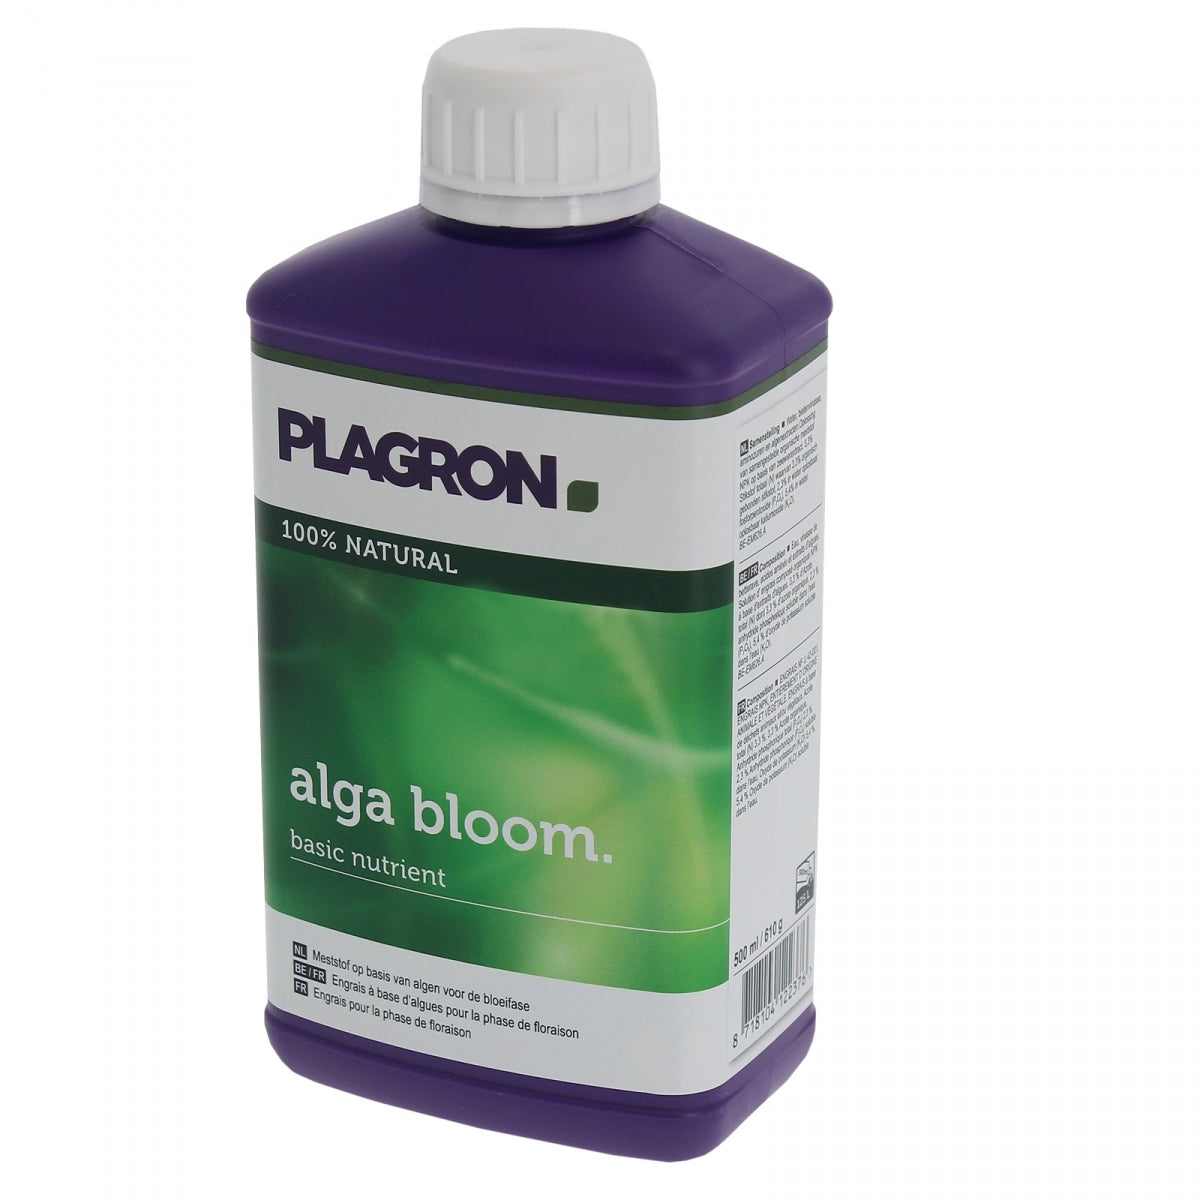 Alga BLOOM Blühdünger 500 ml - PLAGRON